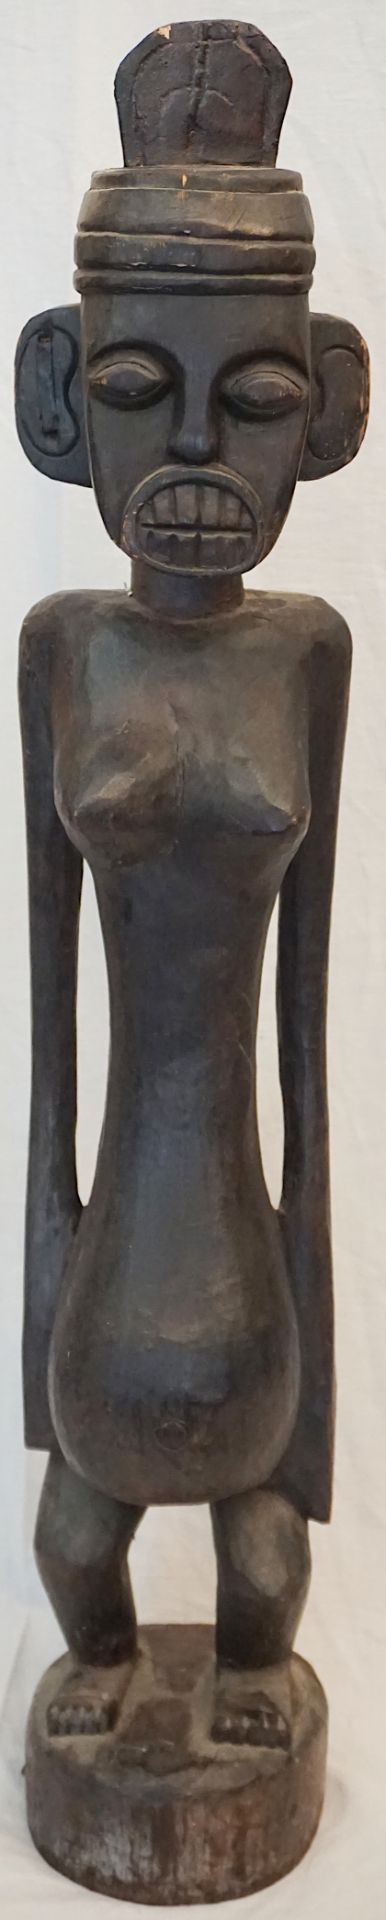 1 Holzfigur Afrika 20. Jh. „Darstellung einer Frau“